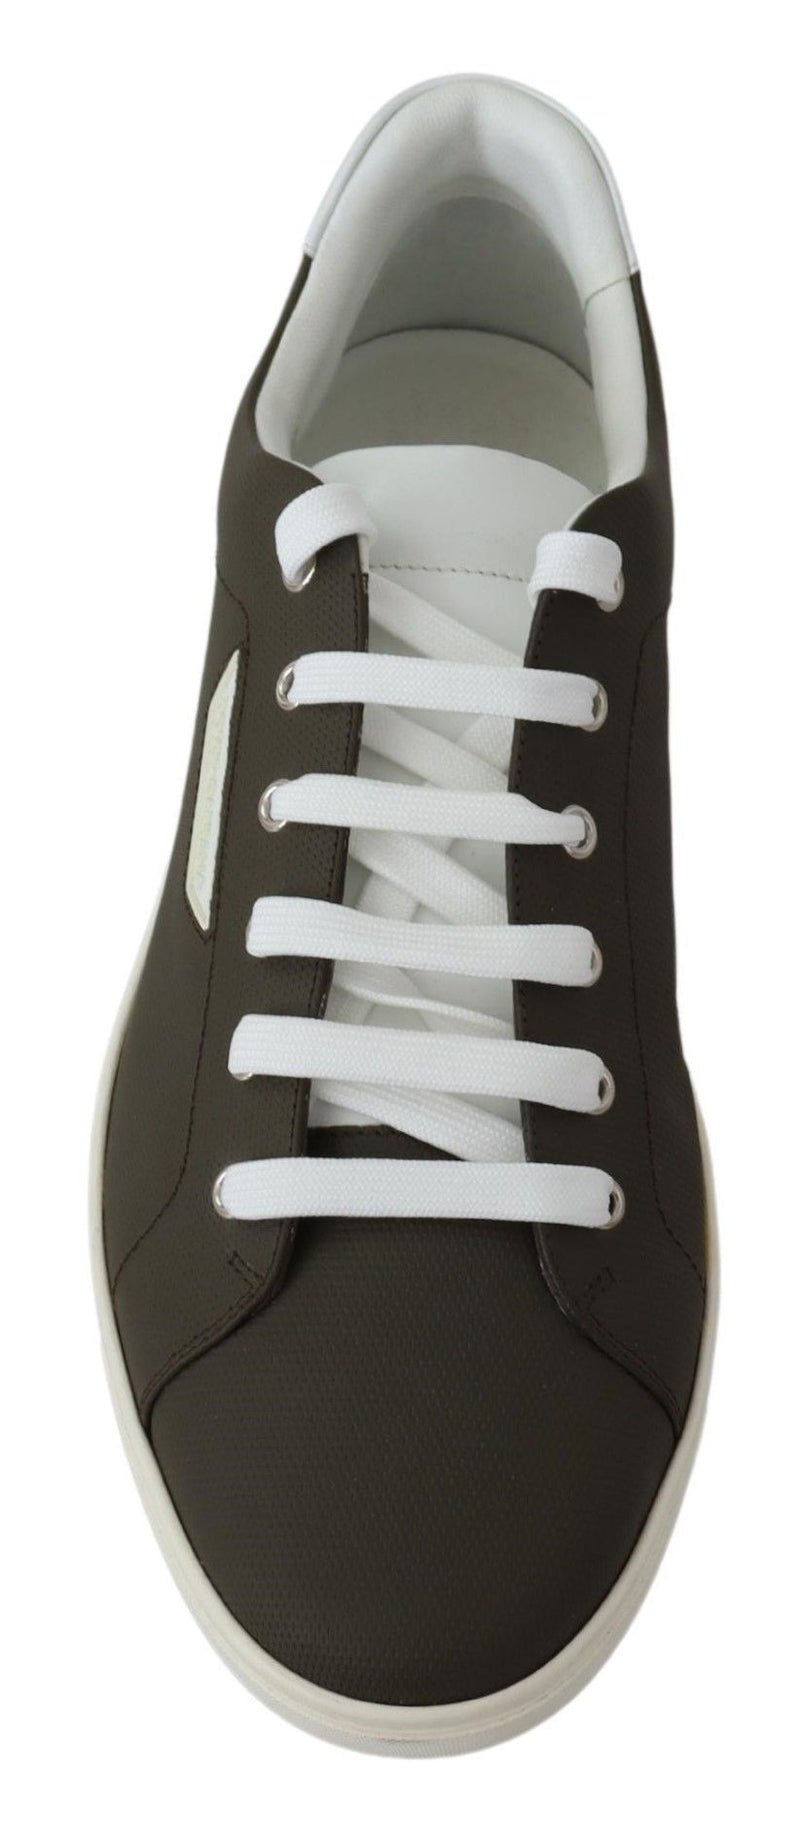 Dolce & Gabbana Sleek White Leather Low Top Men's Sneakers